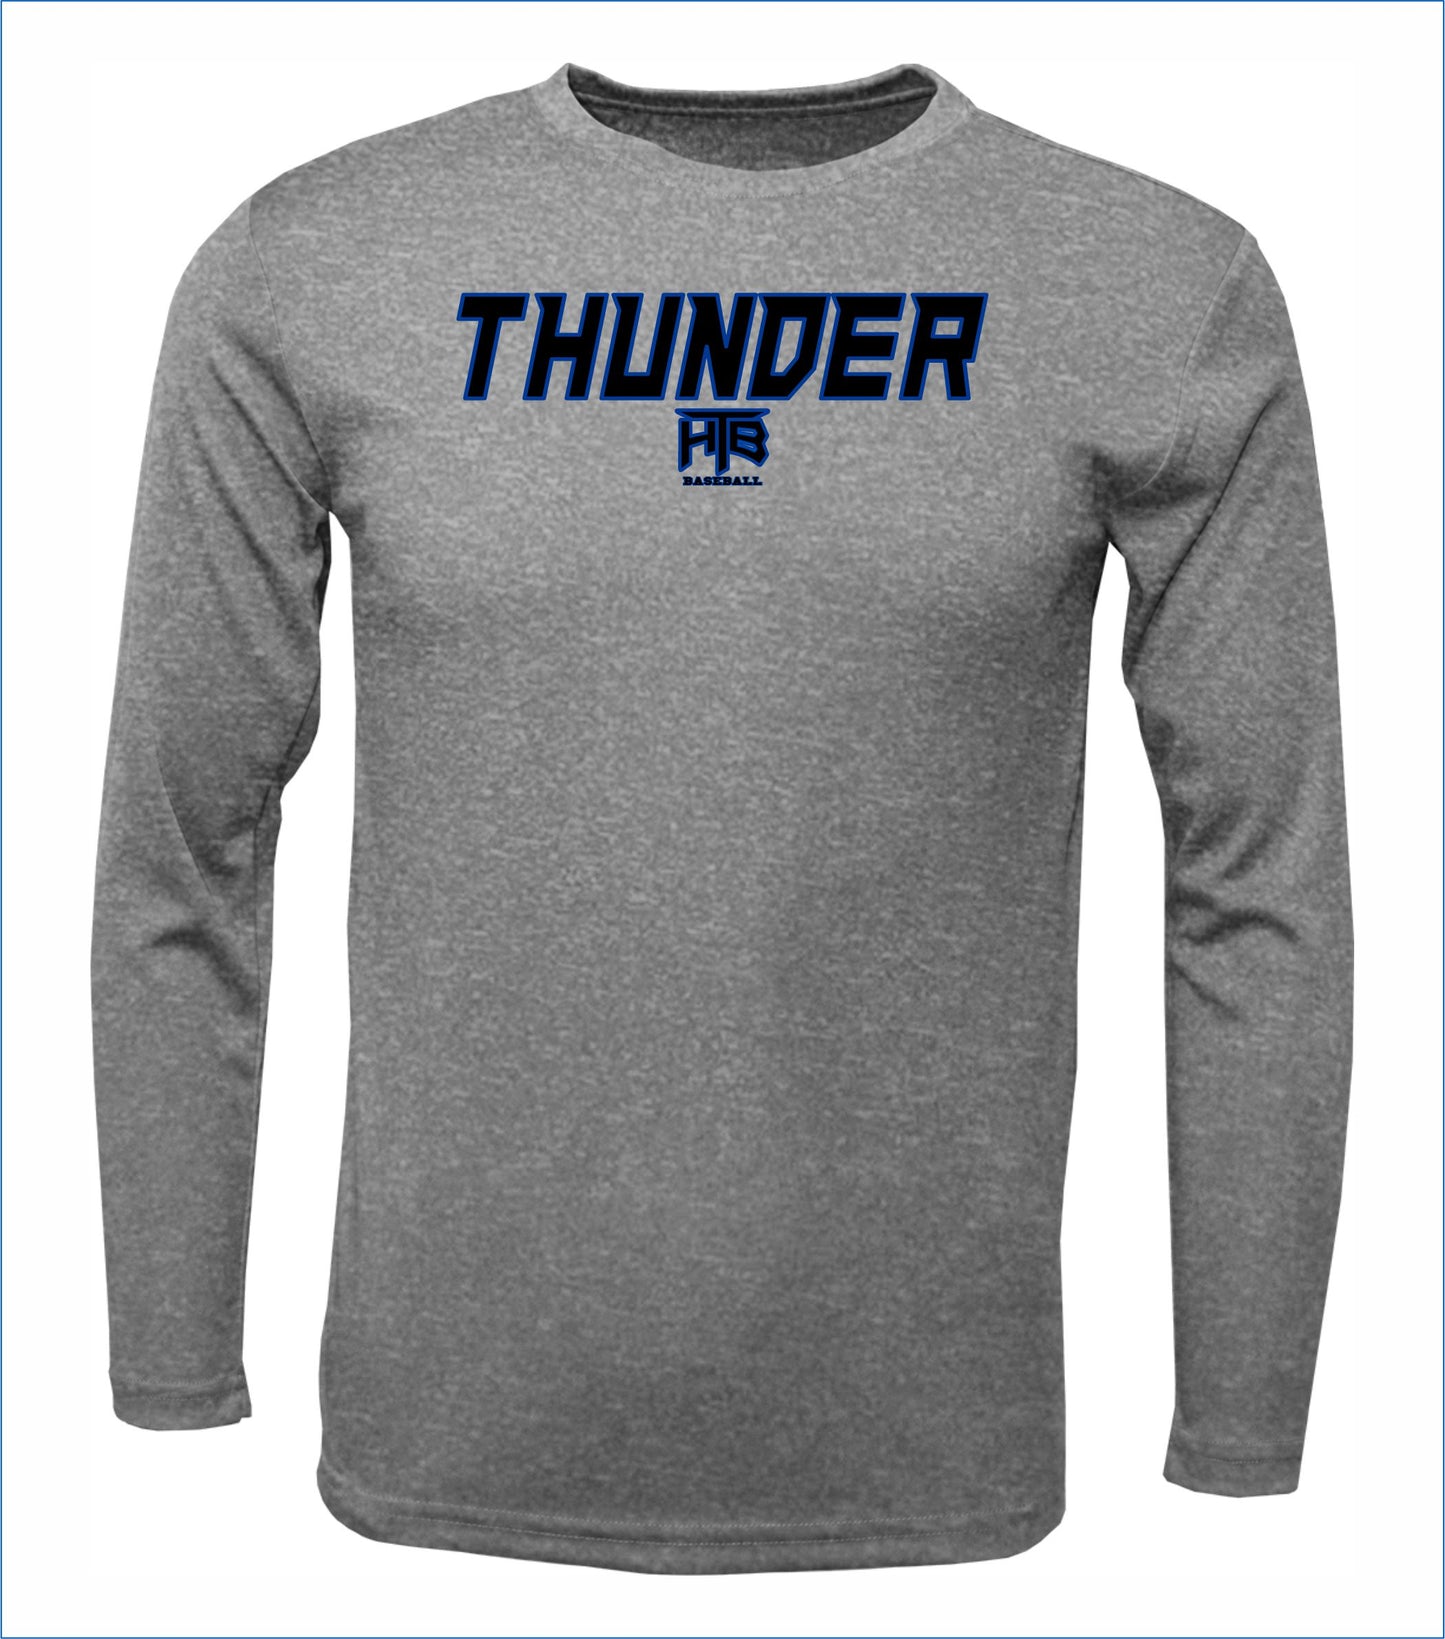 Thunder Long Sleeve Cotton Shirt